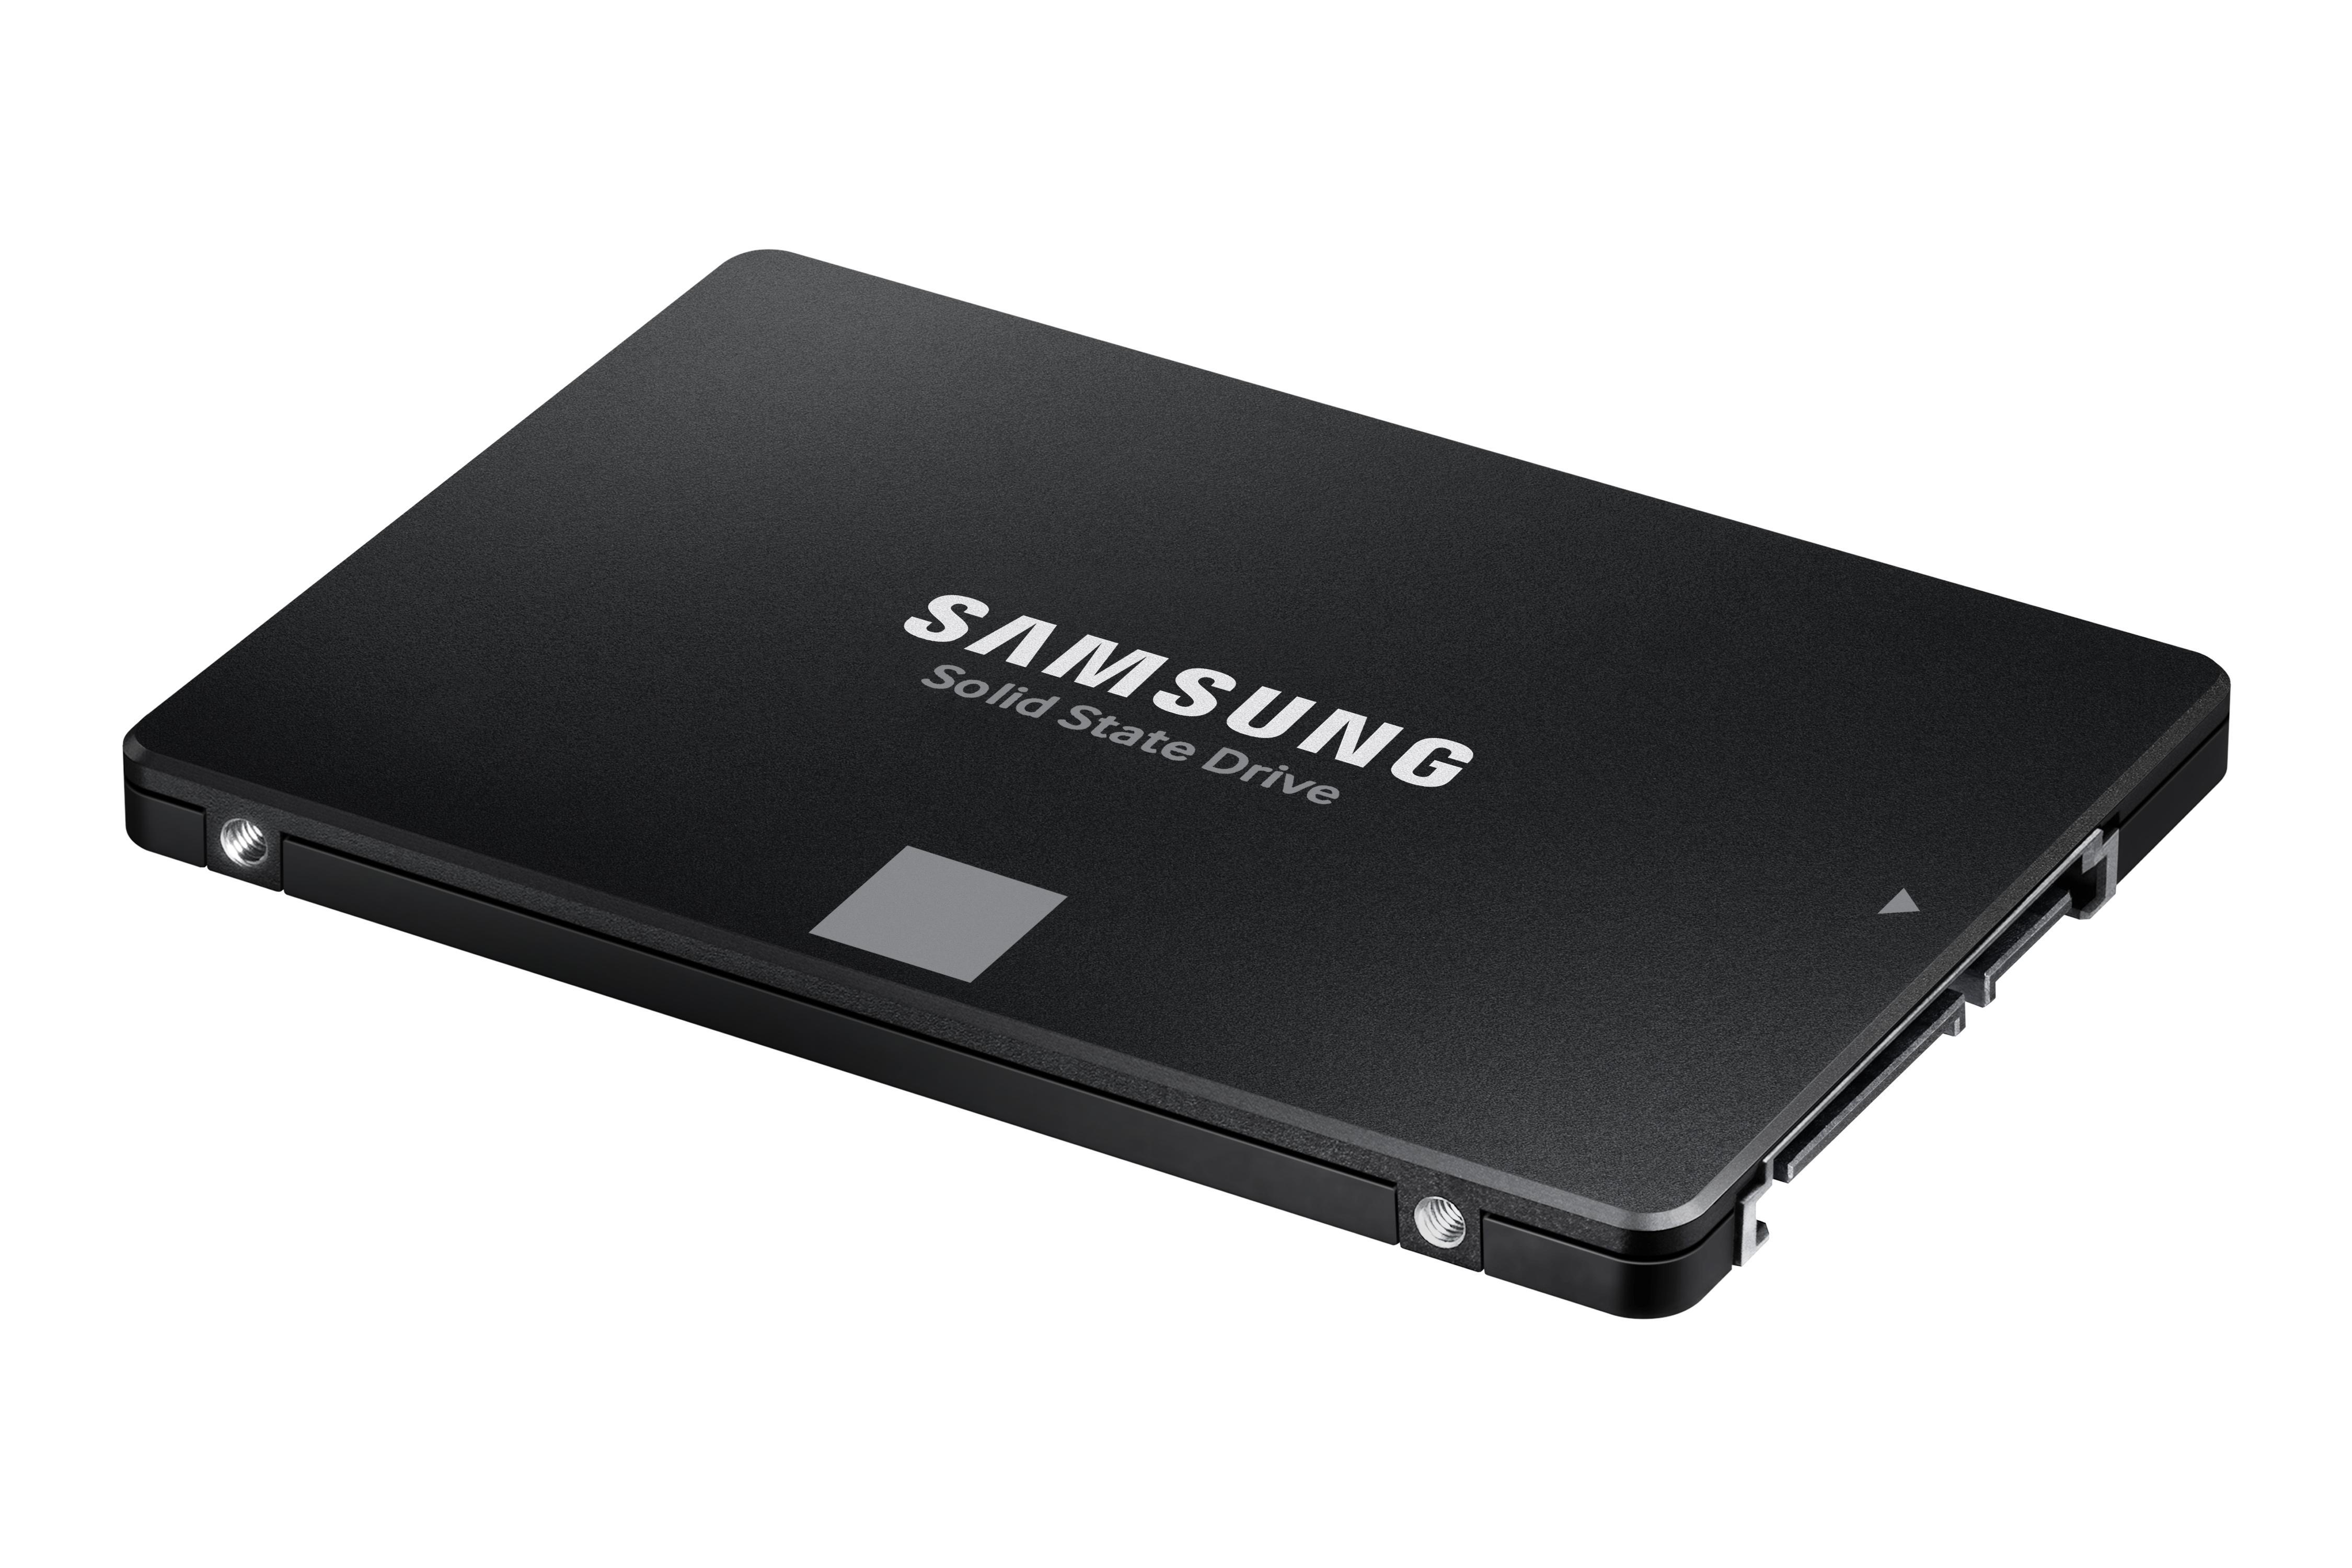 SAMSUNG 870 EVO Festplatte Gbps, intern 2,5 SATA Retail, 6 GB SSD 500 Zoll